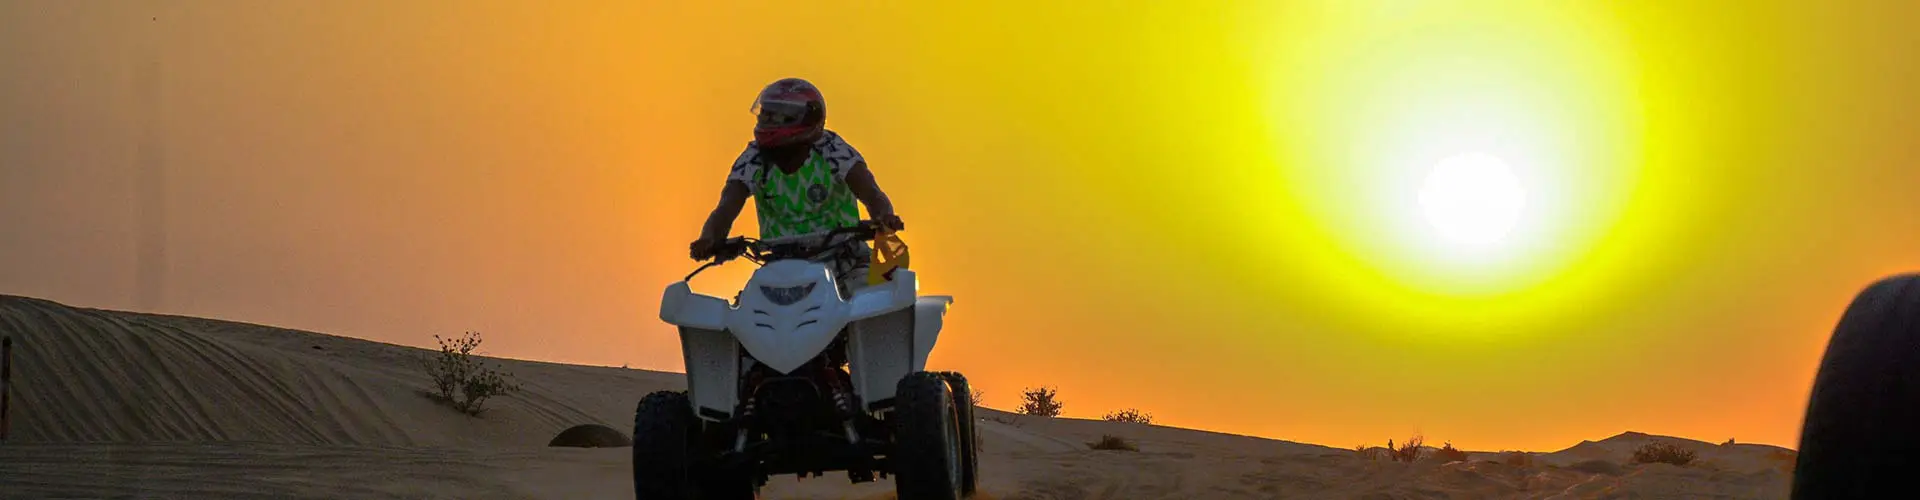 Desert Safari with quad biking